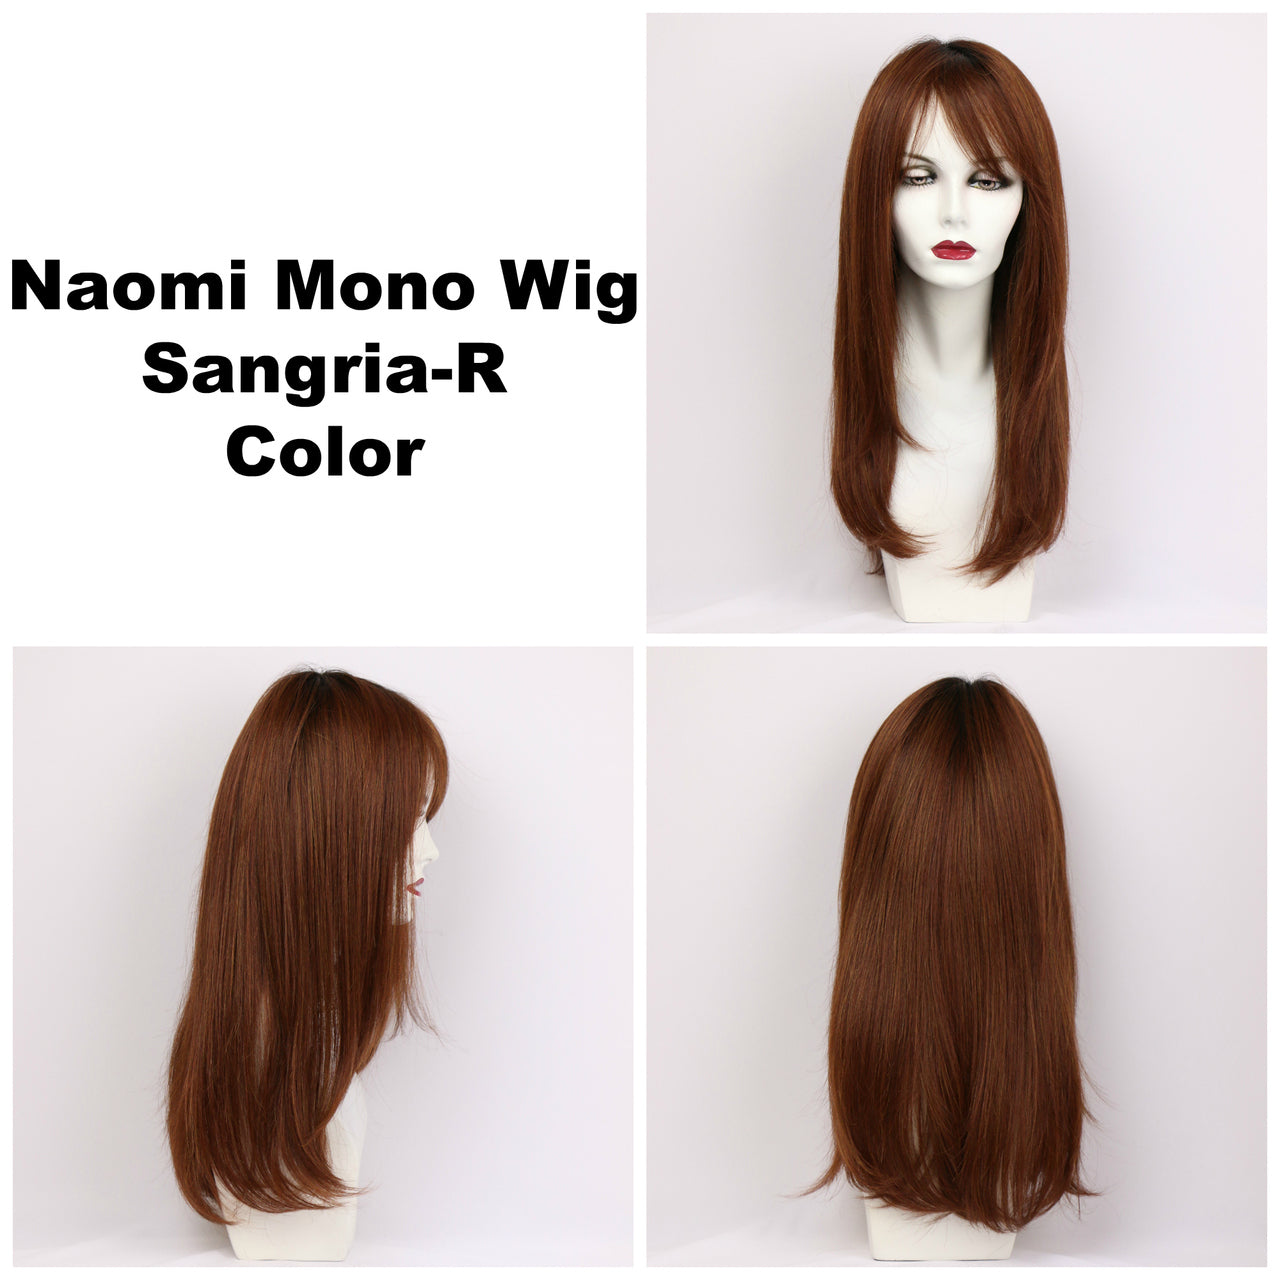 Sangria-R / Naomi Monofilament w/ Roots / Long Wig